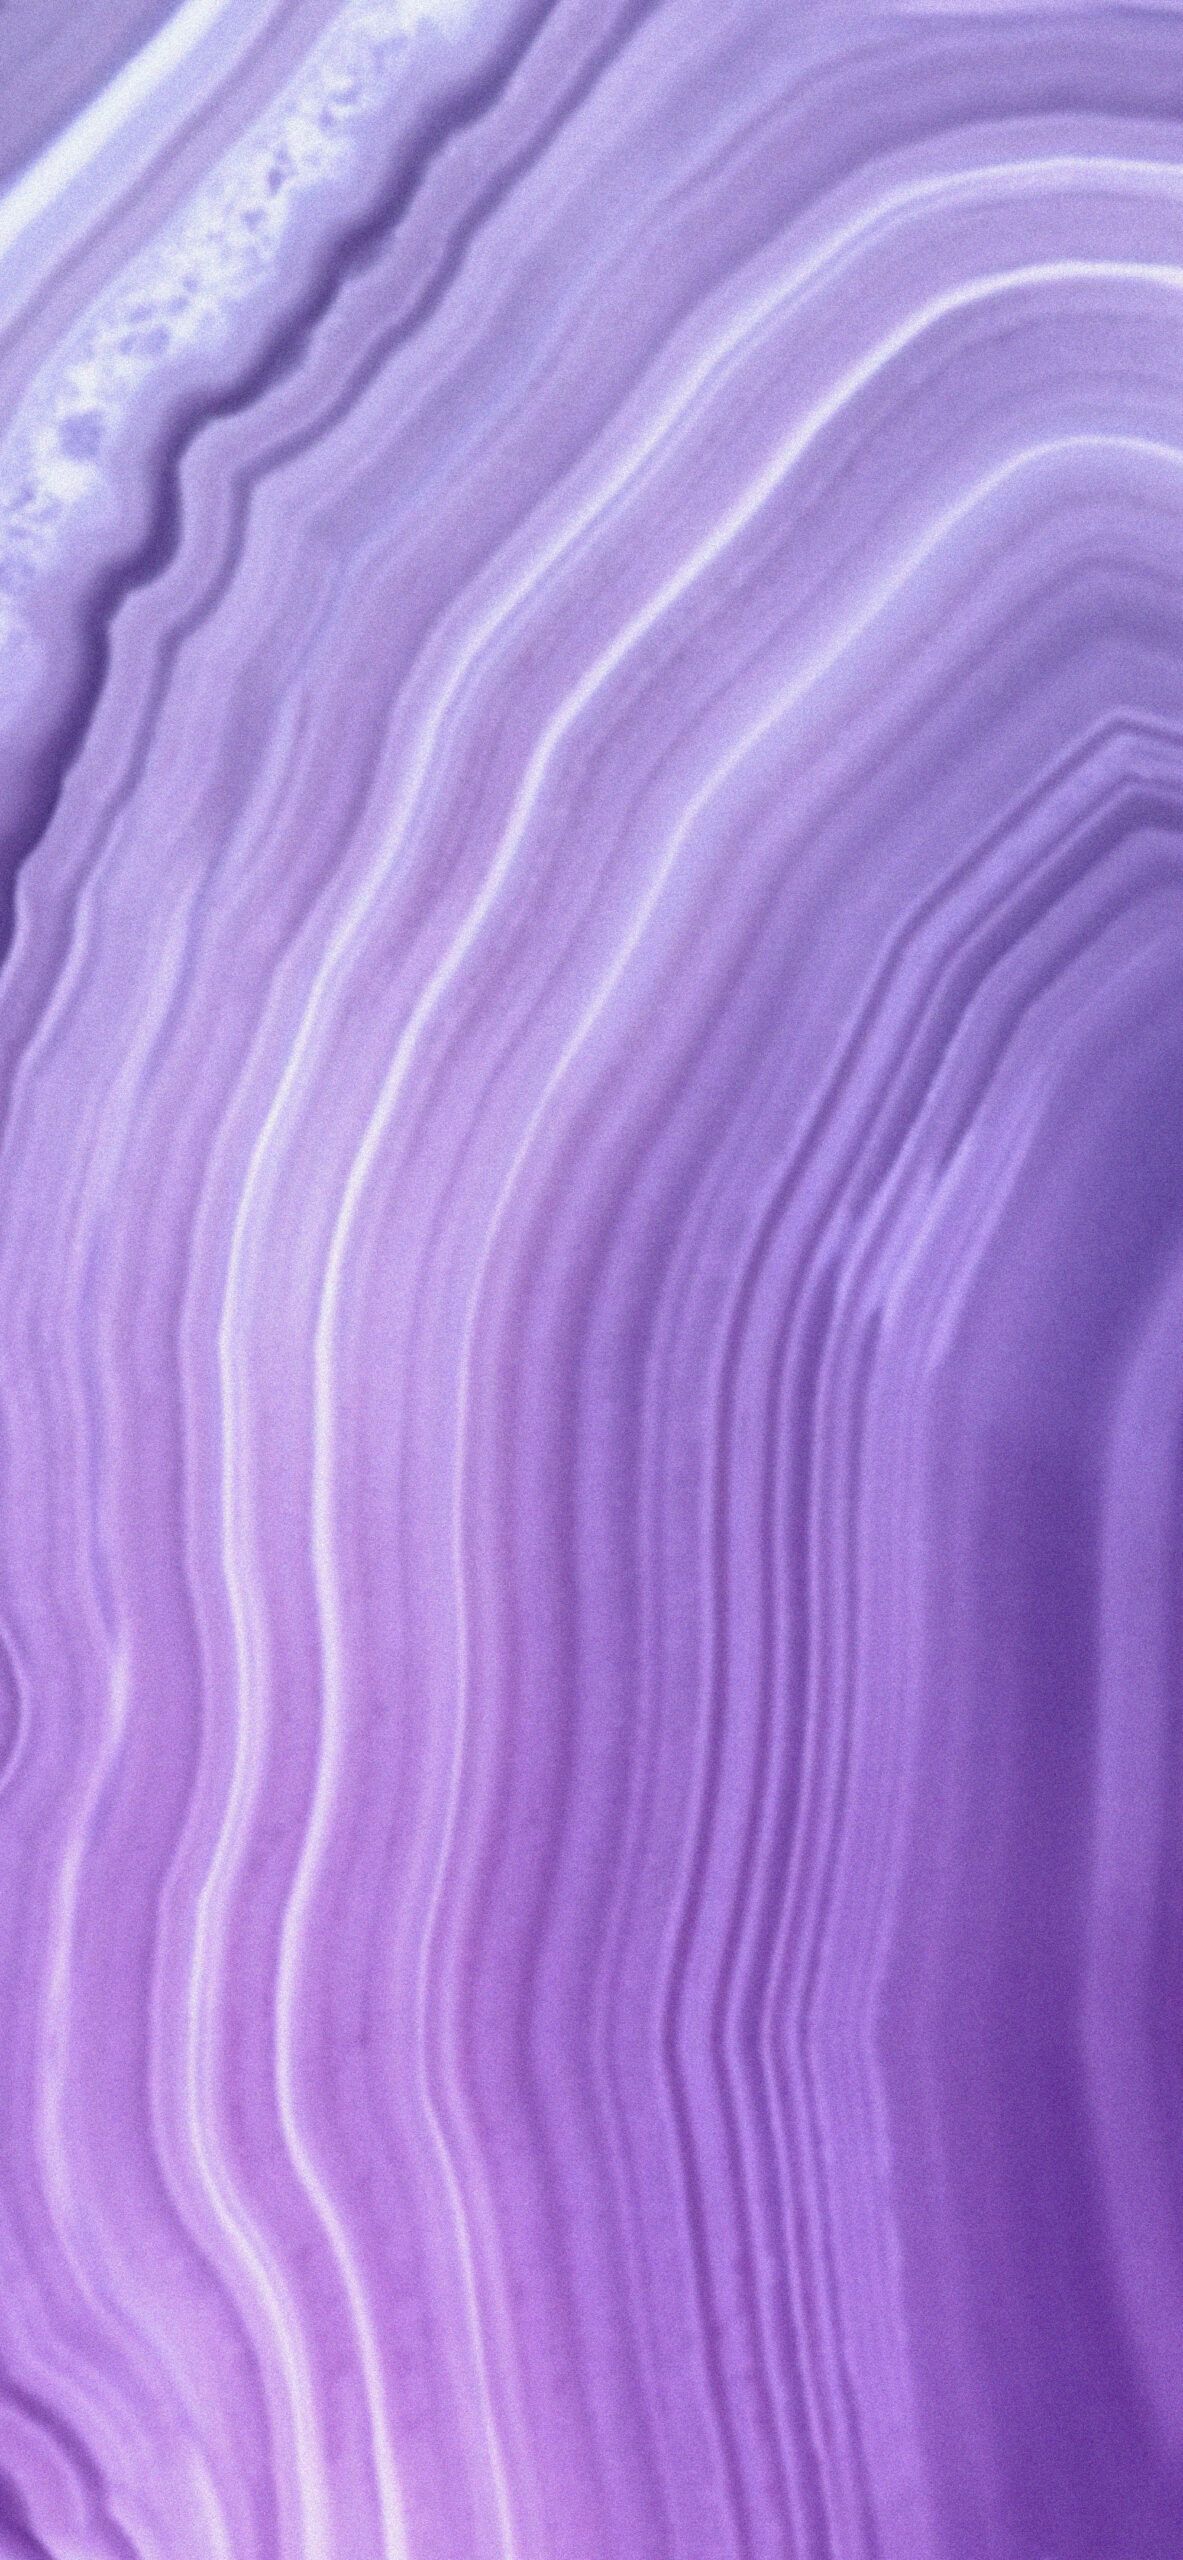 A close up of a purple and white agate stone. - Purple, pastel purple, lavender, light purple